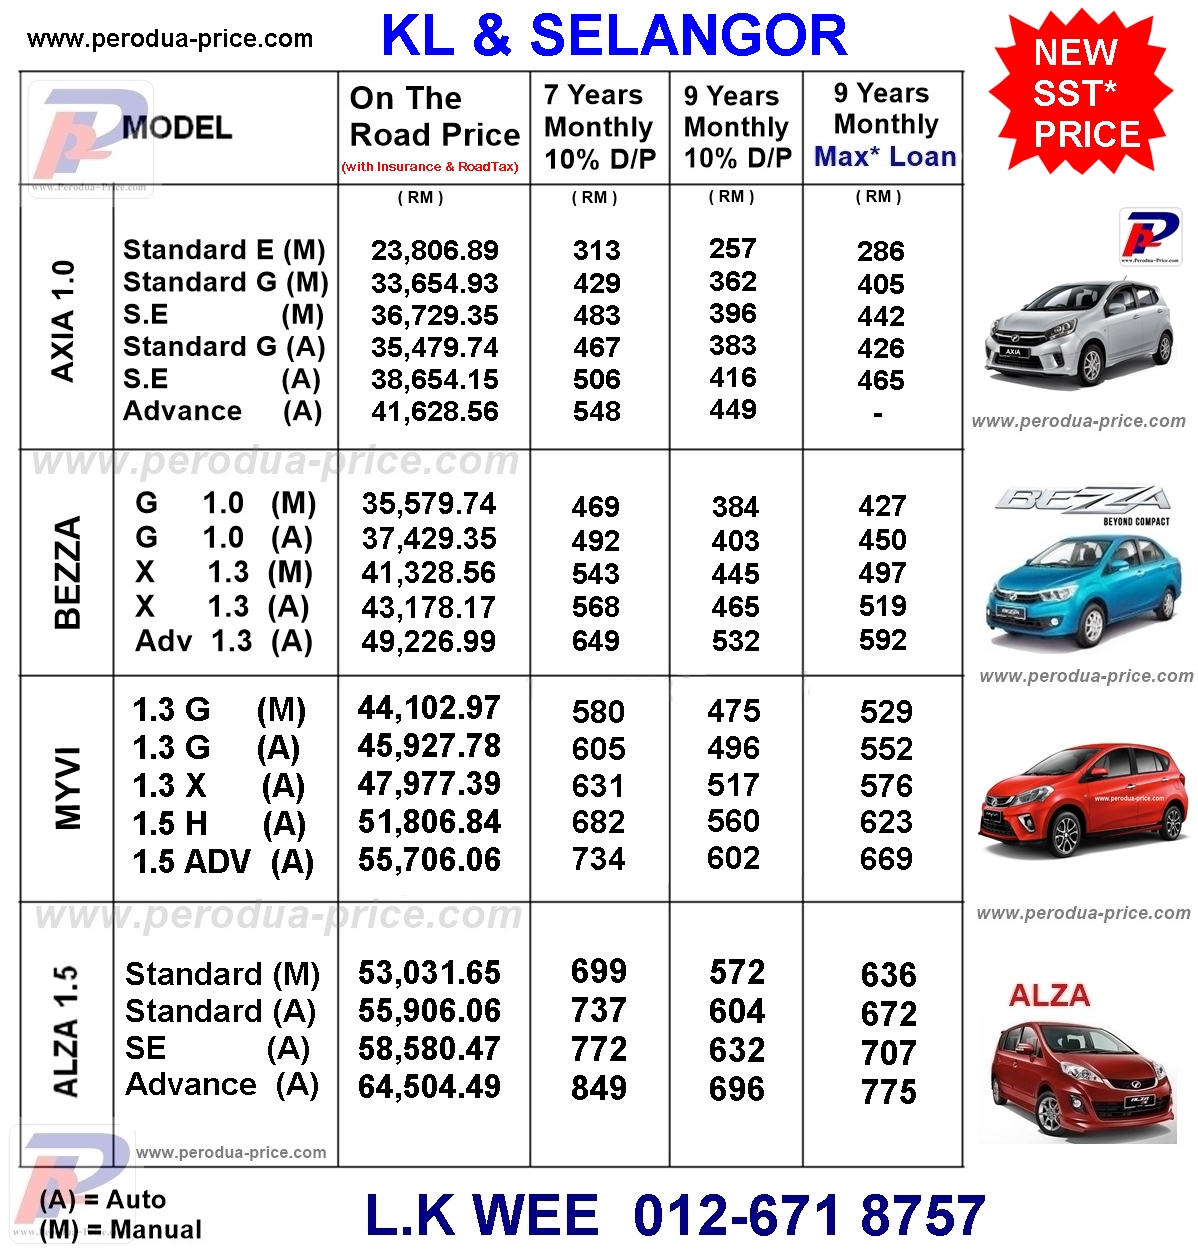 Perodua myvi price